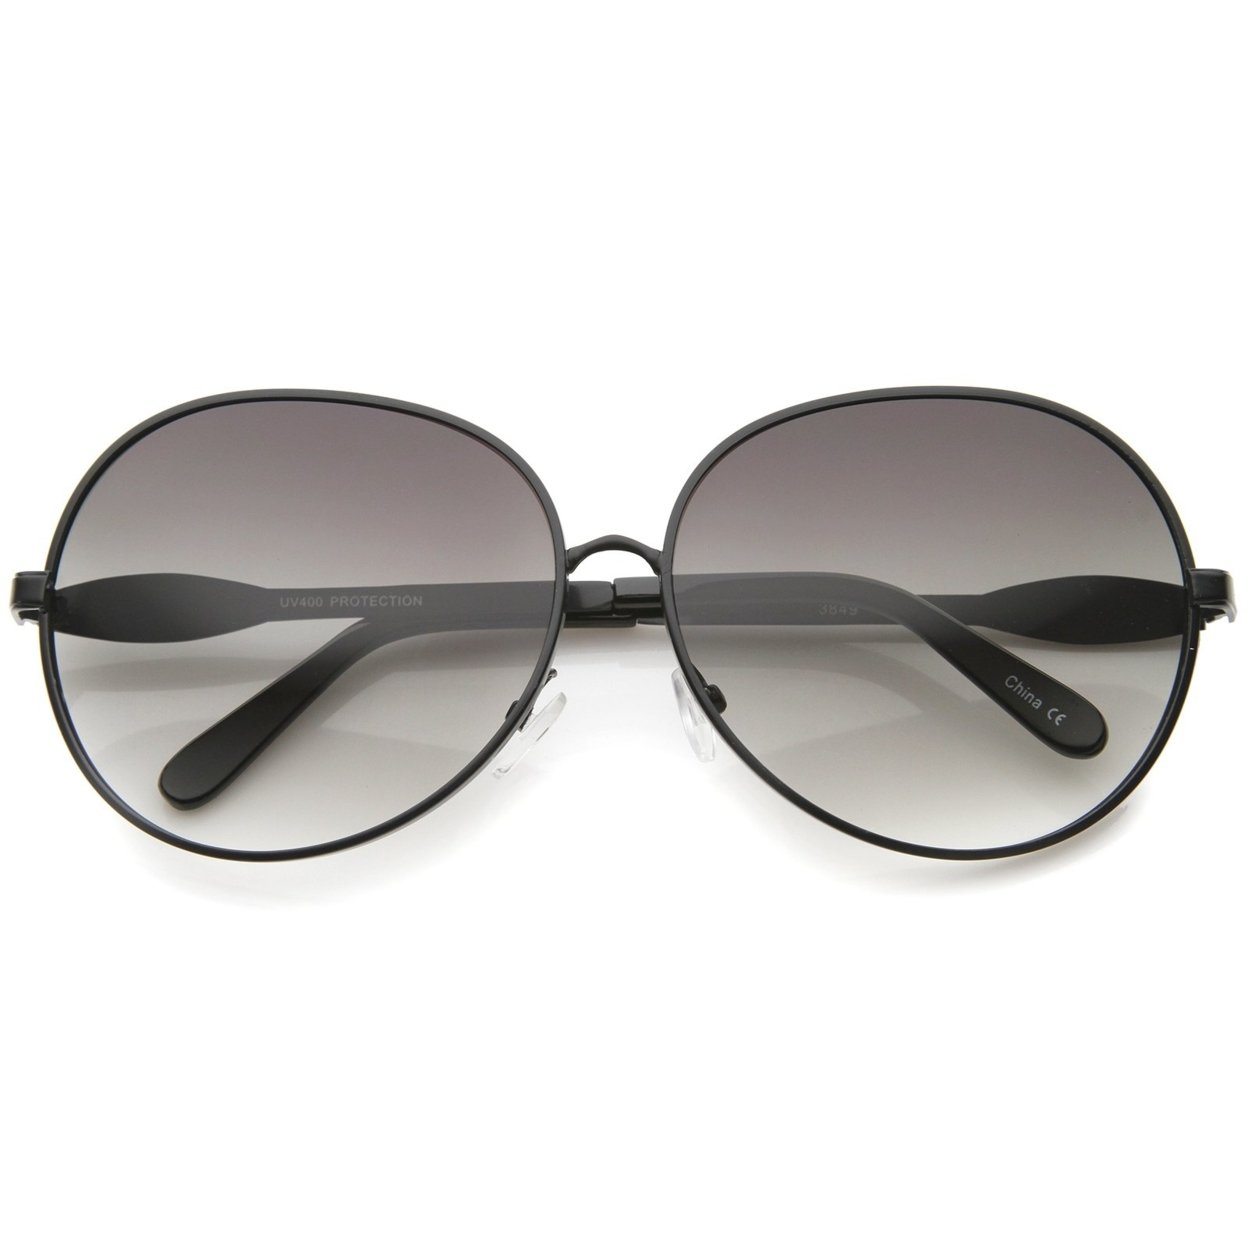 Womens Glam Full Metal Frame Oversized Round Sunglasses 63mm - Silver / Lavender